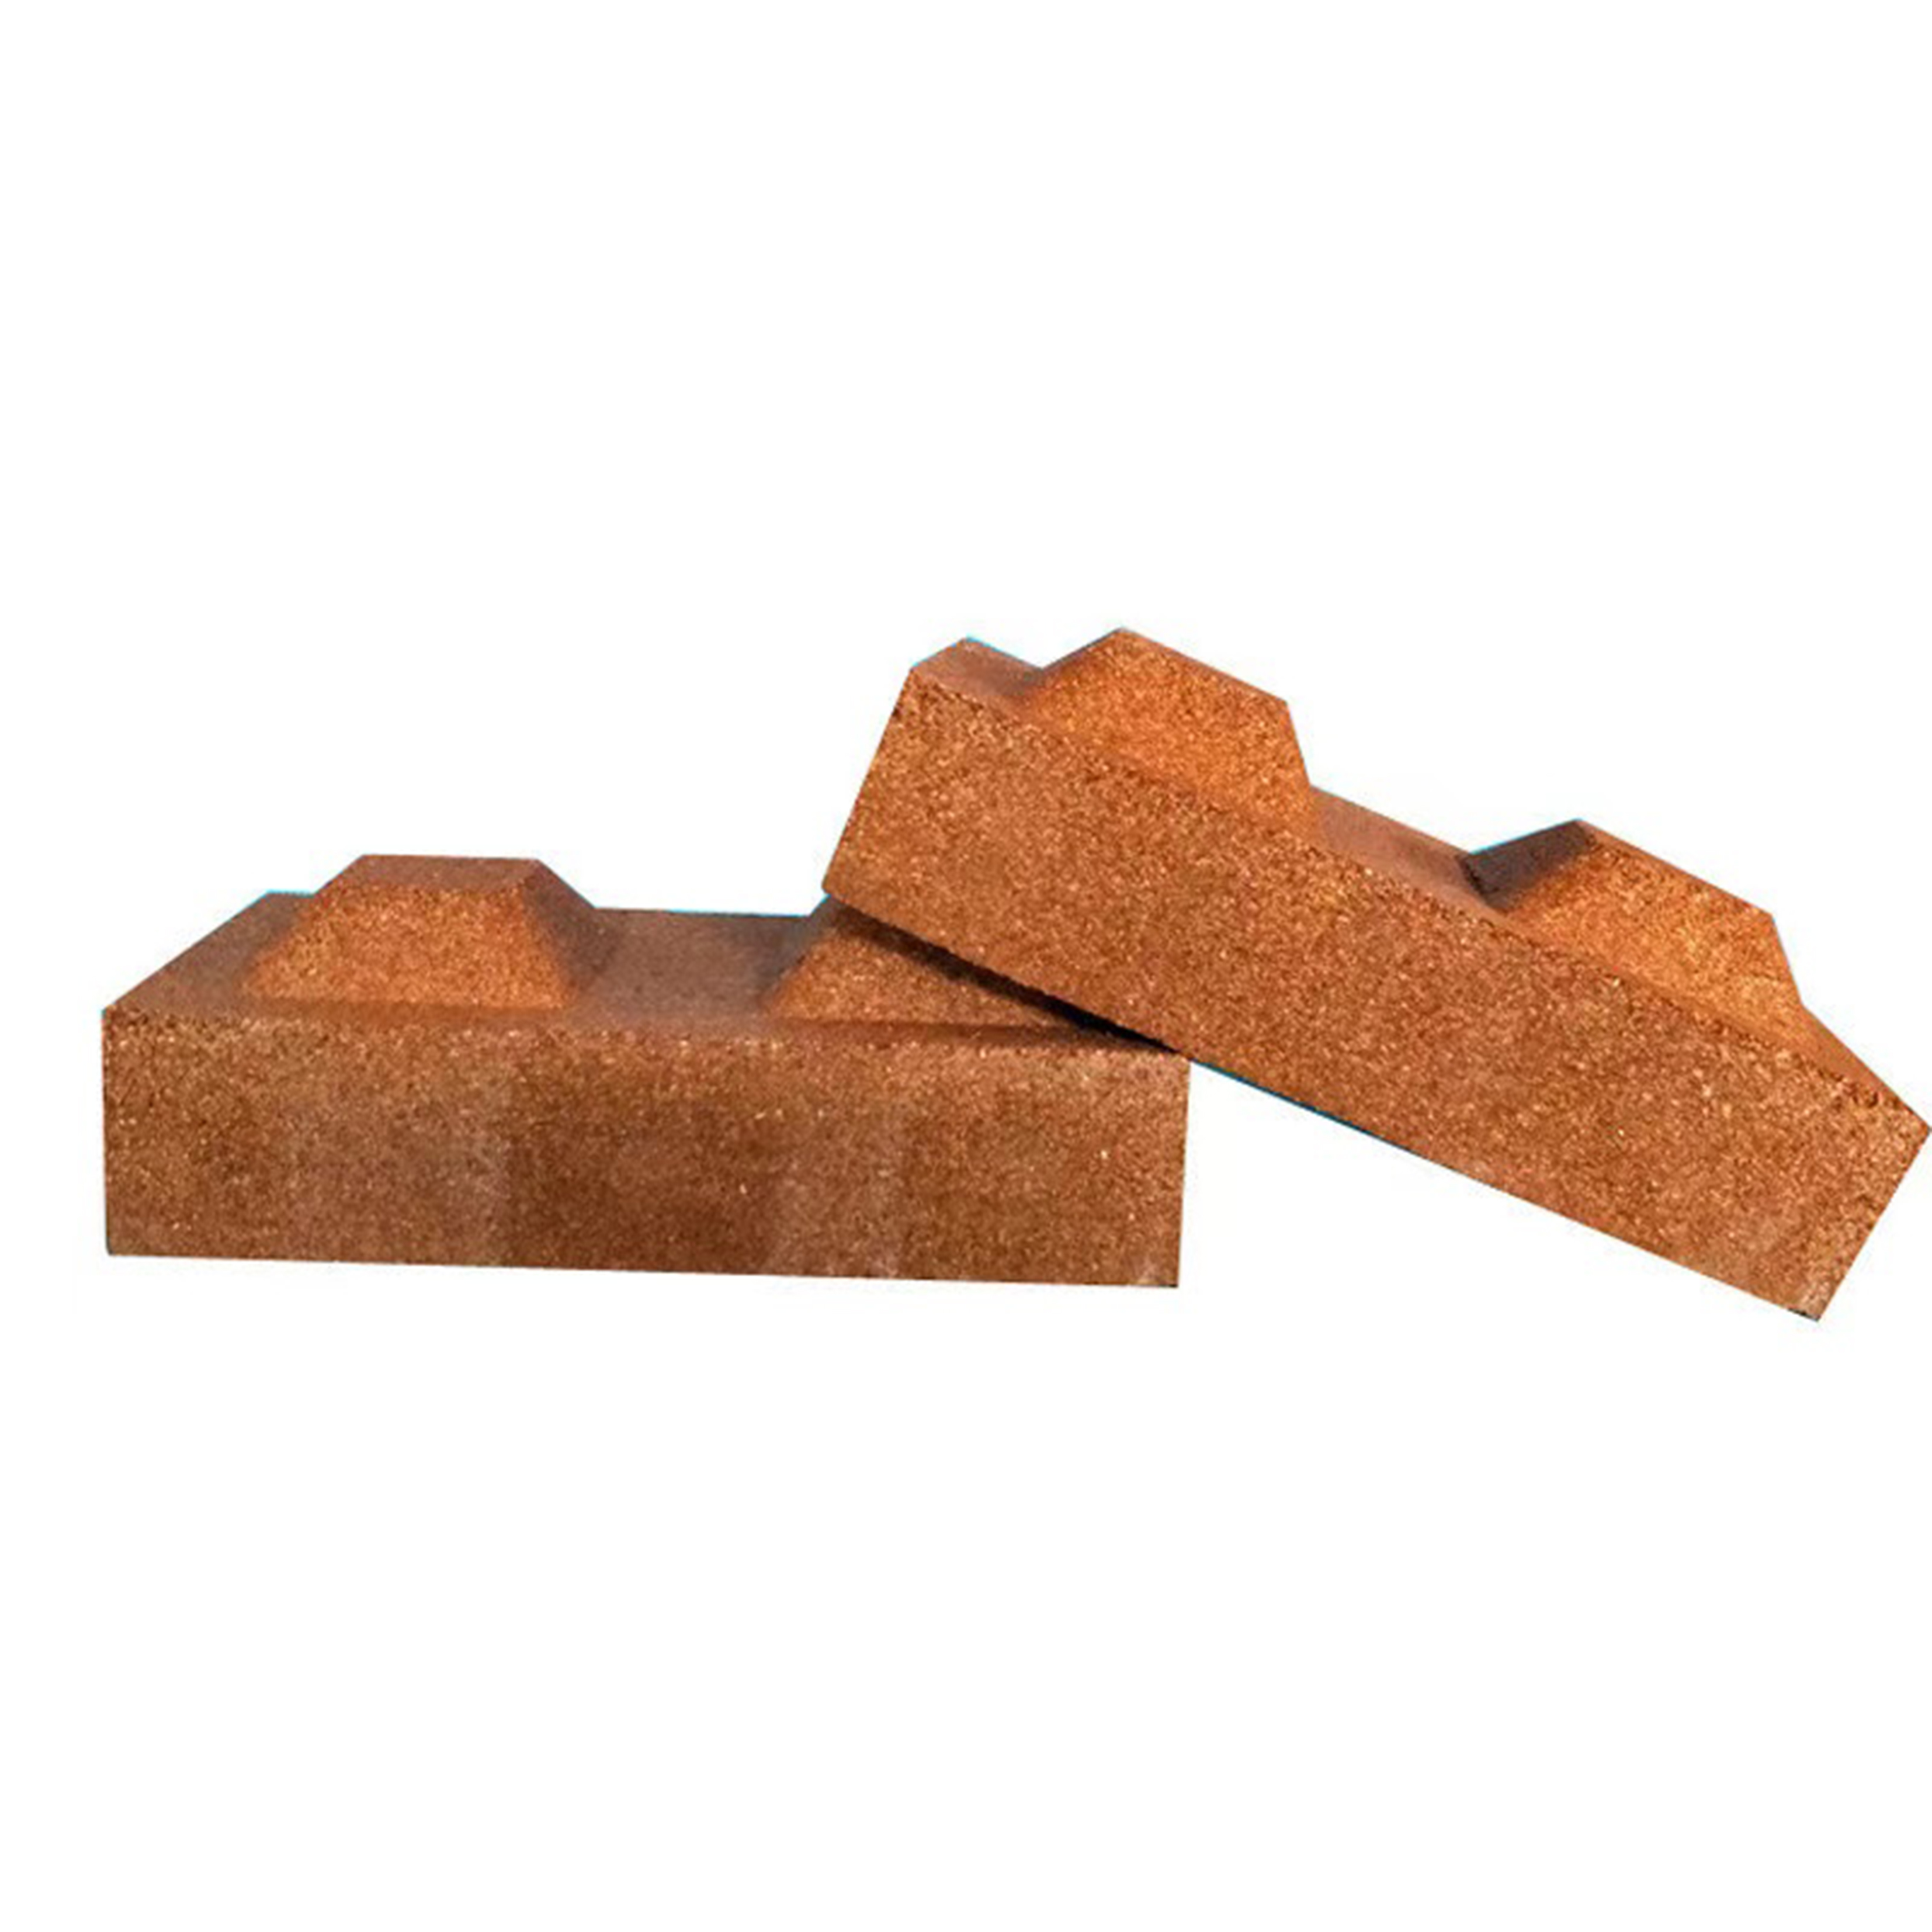 Sell professional flame-retardant sealed fire-resistant bricks